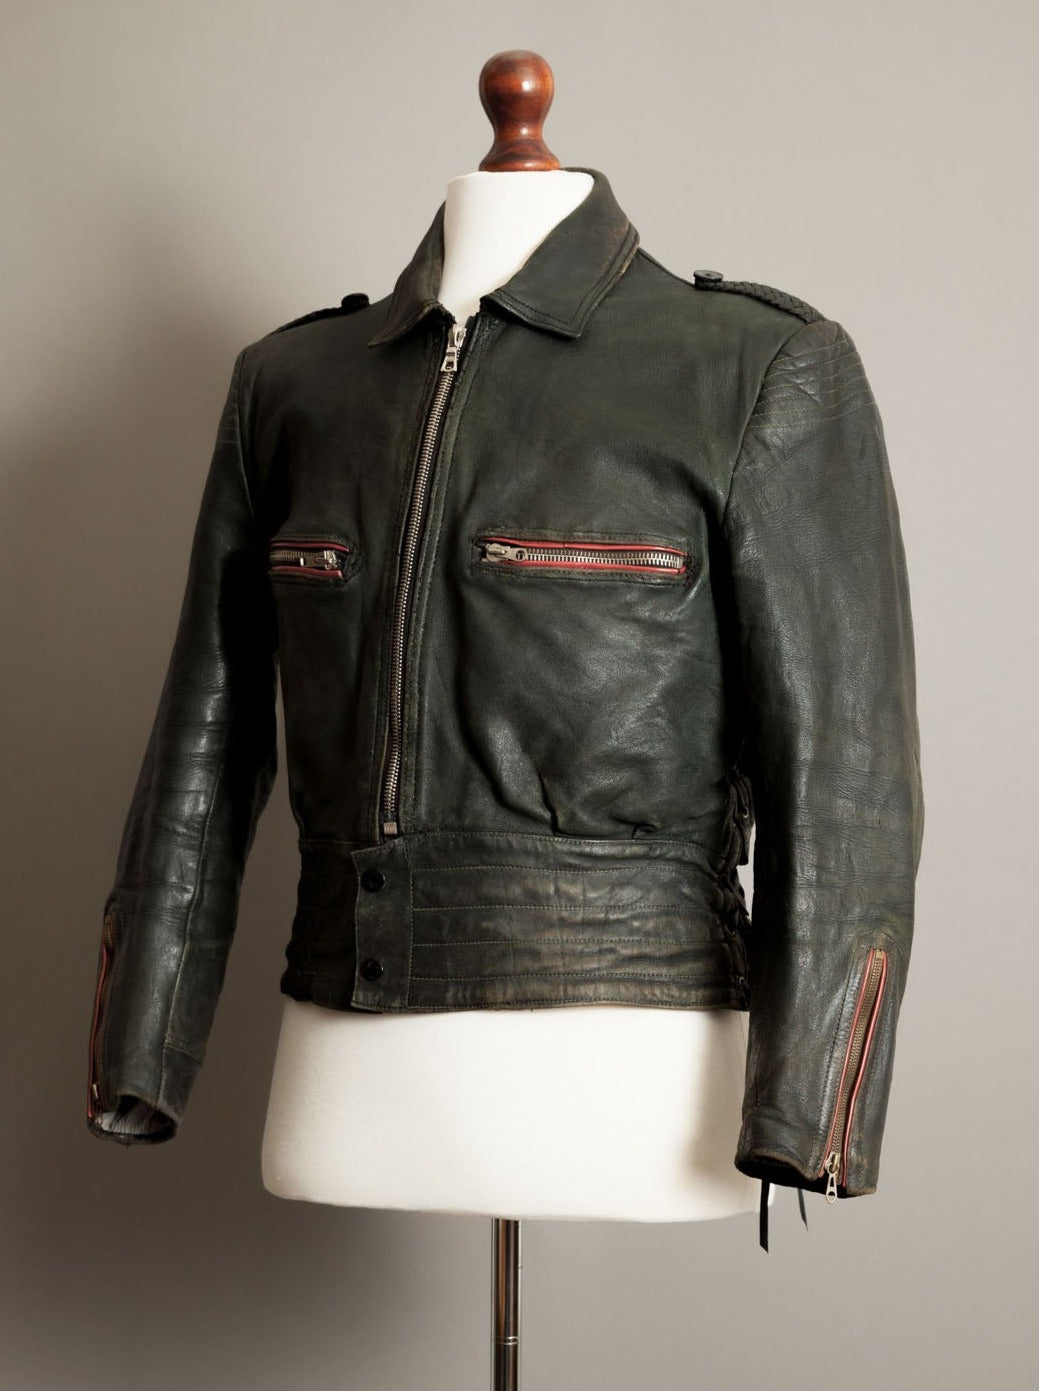 Vintage 1950s German Leather Motorcycle Jacket - Small (38-40)